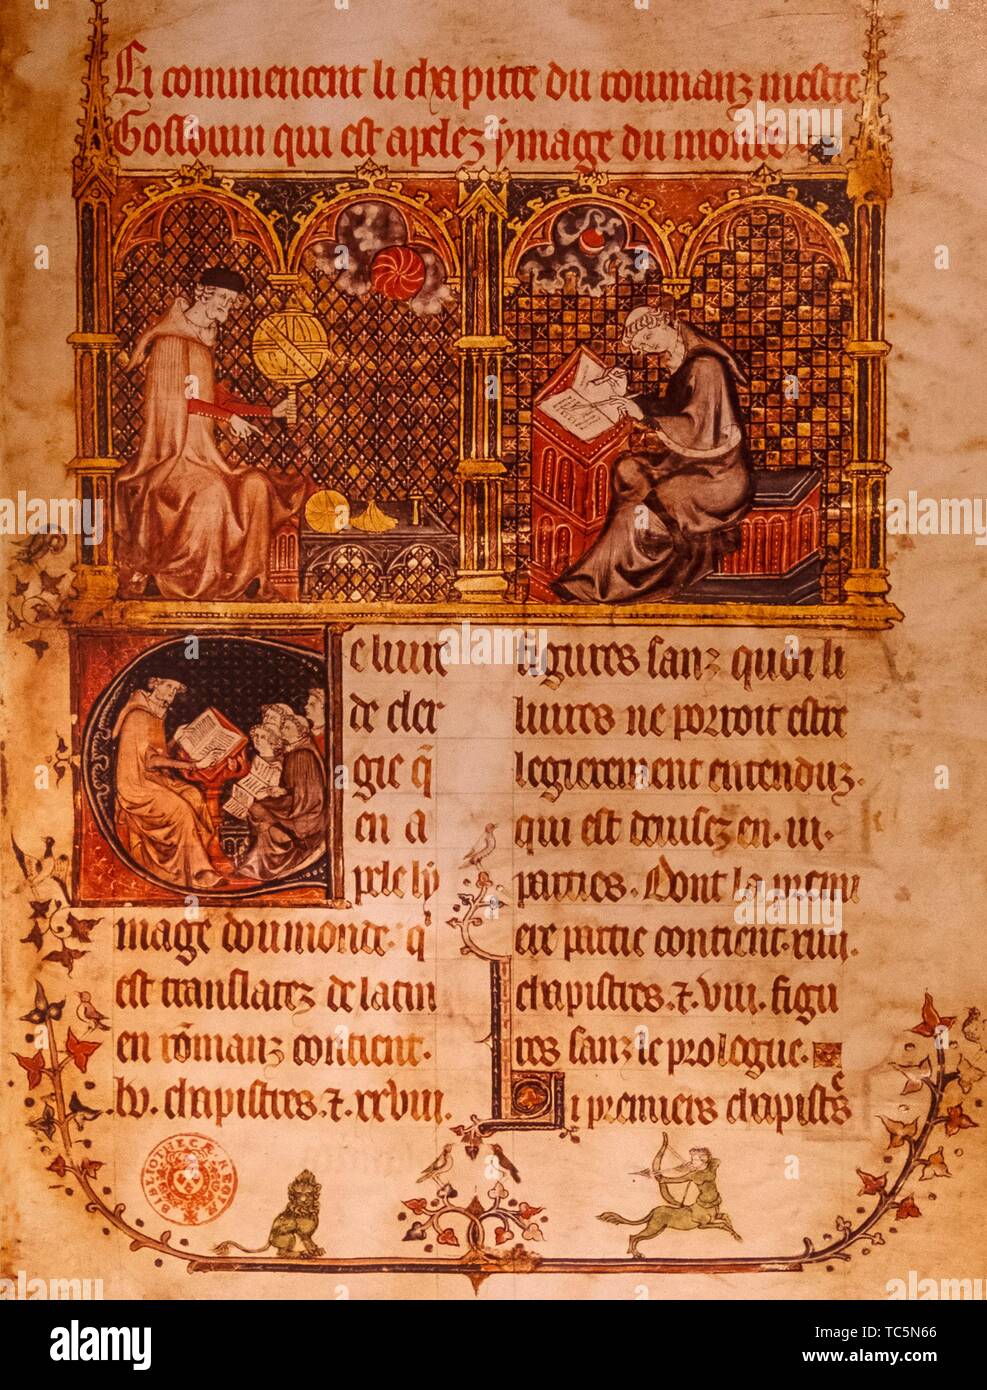 ASTRONOME ET scriba, 1315. France-Ocitanie-lotto- Musée de l'Ecriture a Figeac. Foto Stock